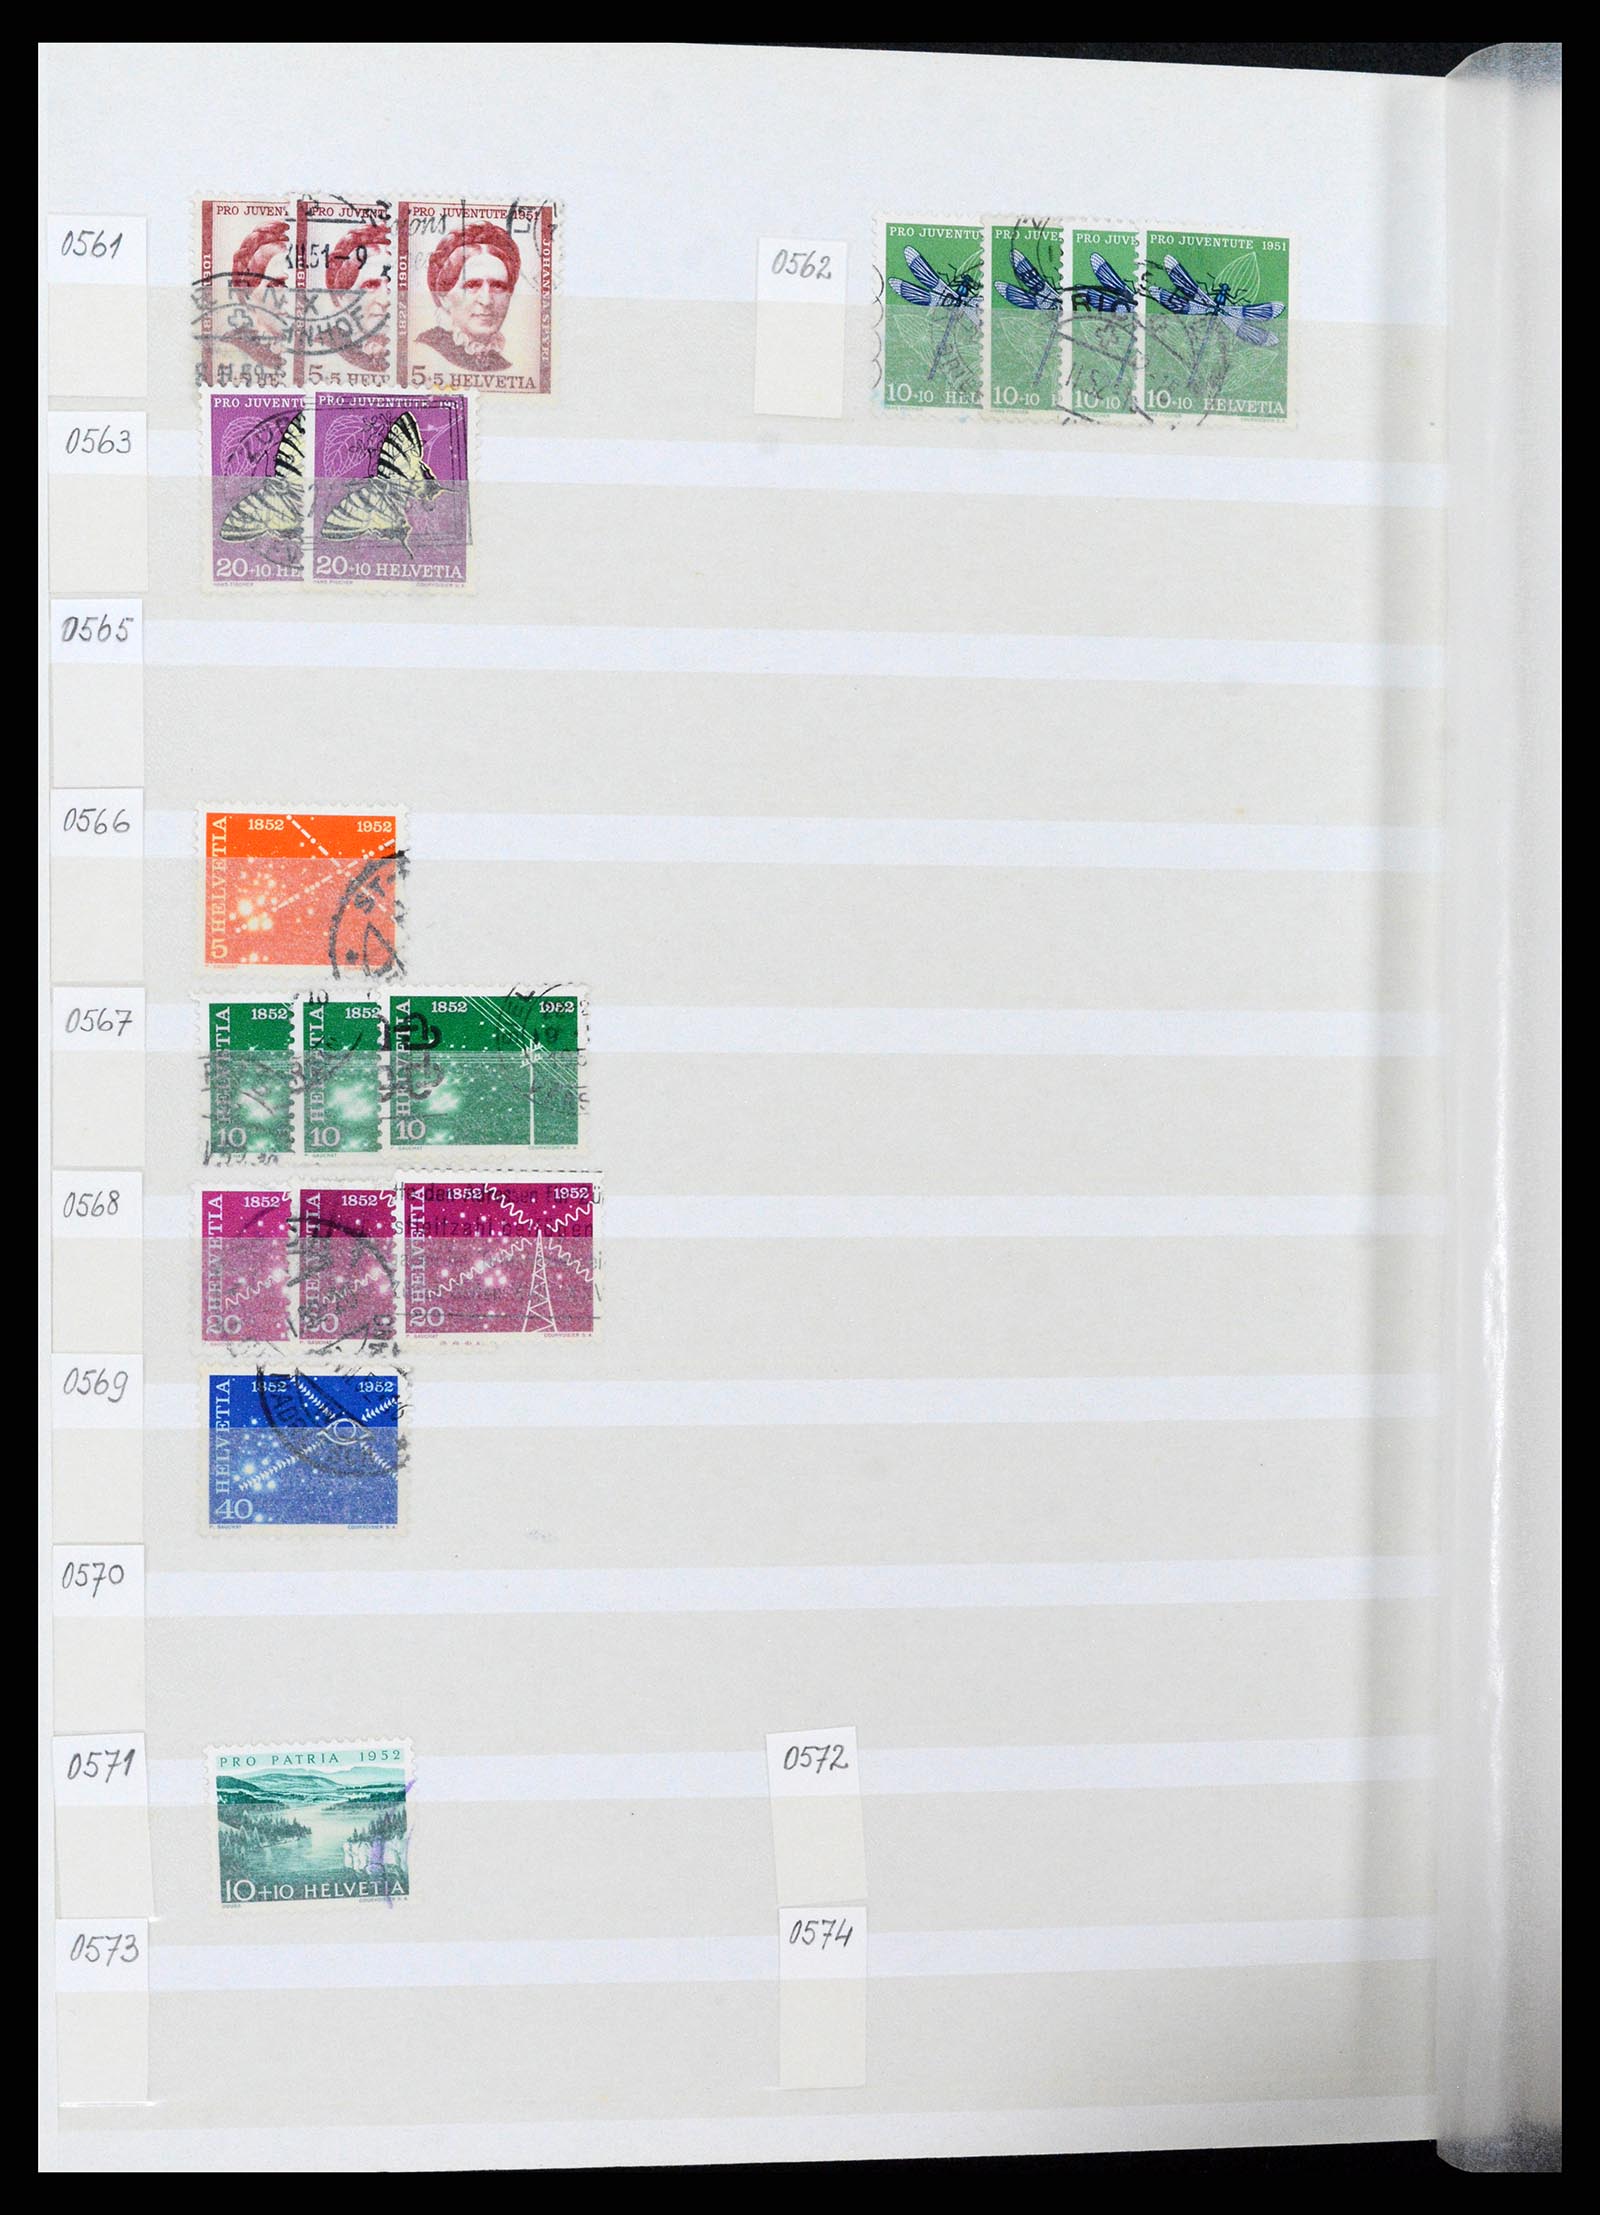 37328 040 - Stamp collection 37328 Switzerland 1854-1991.